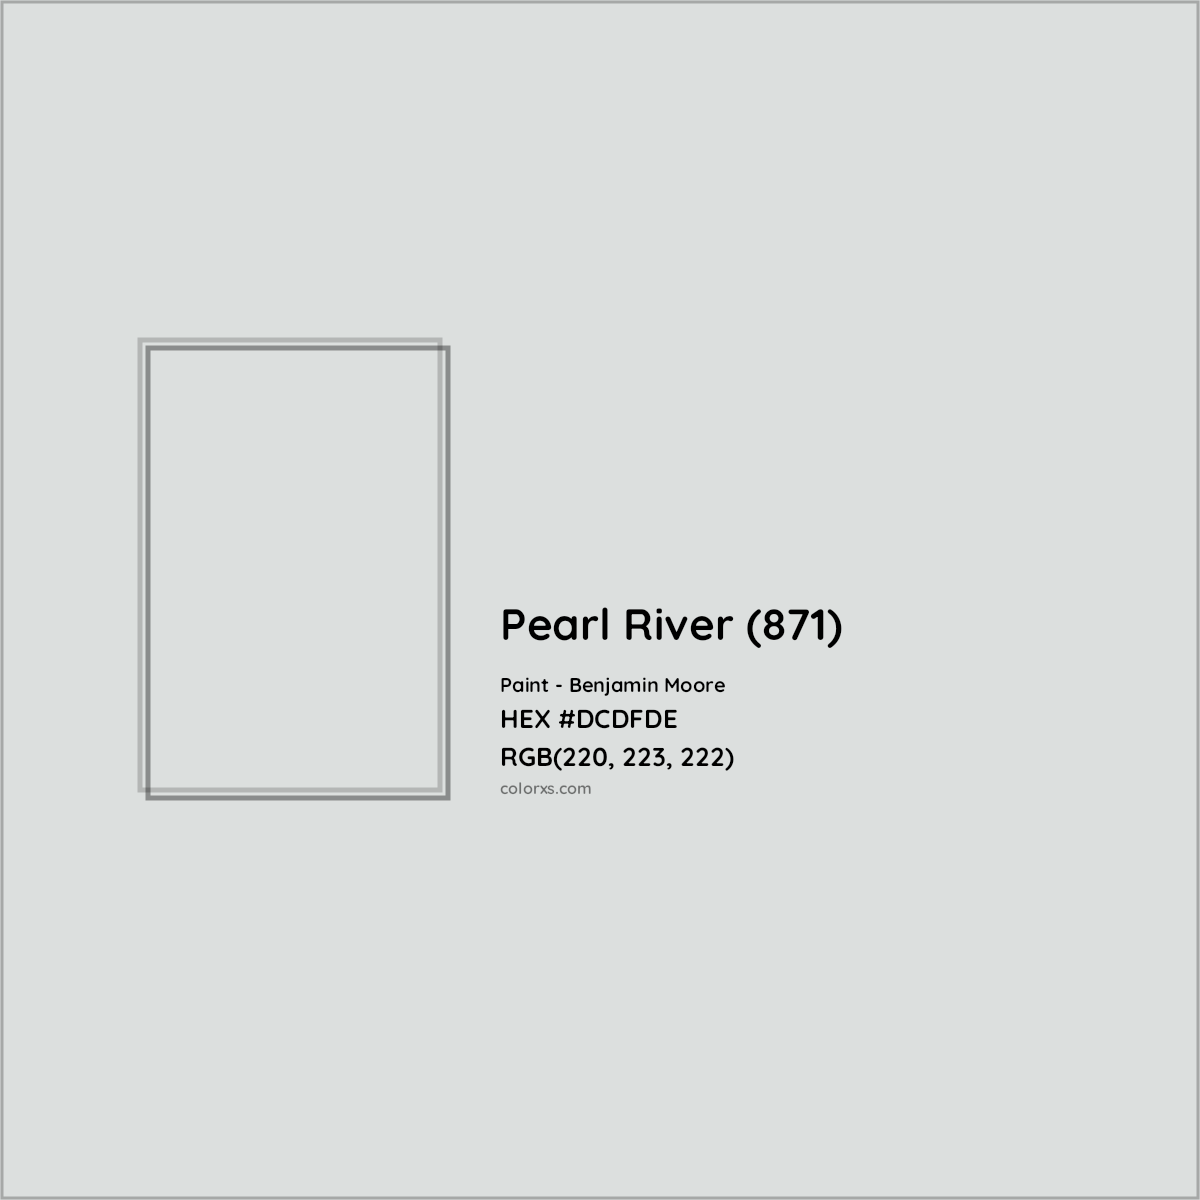 HEX #DCDFDE Pearl River (871) Paint Benjamin Moore - Color Code